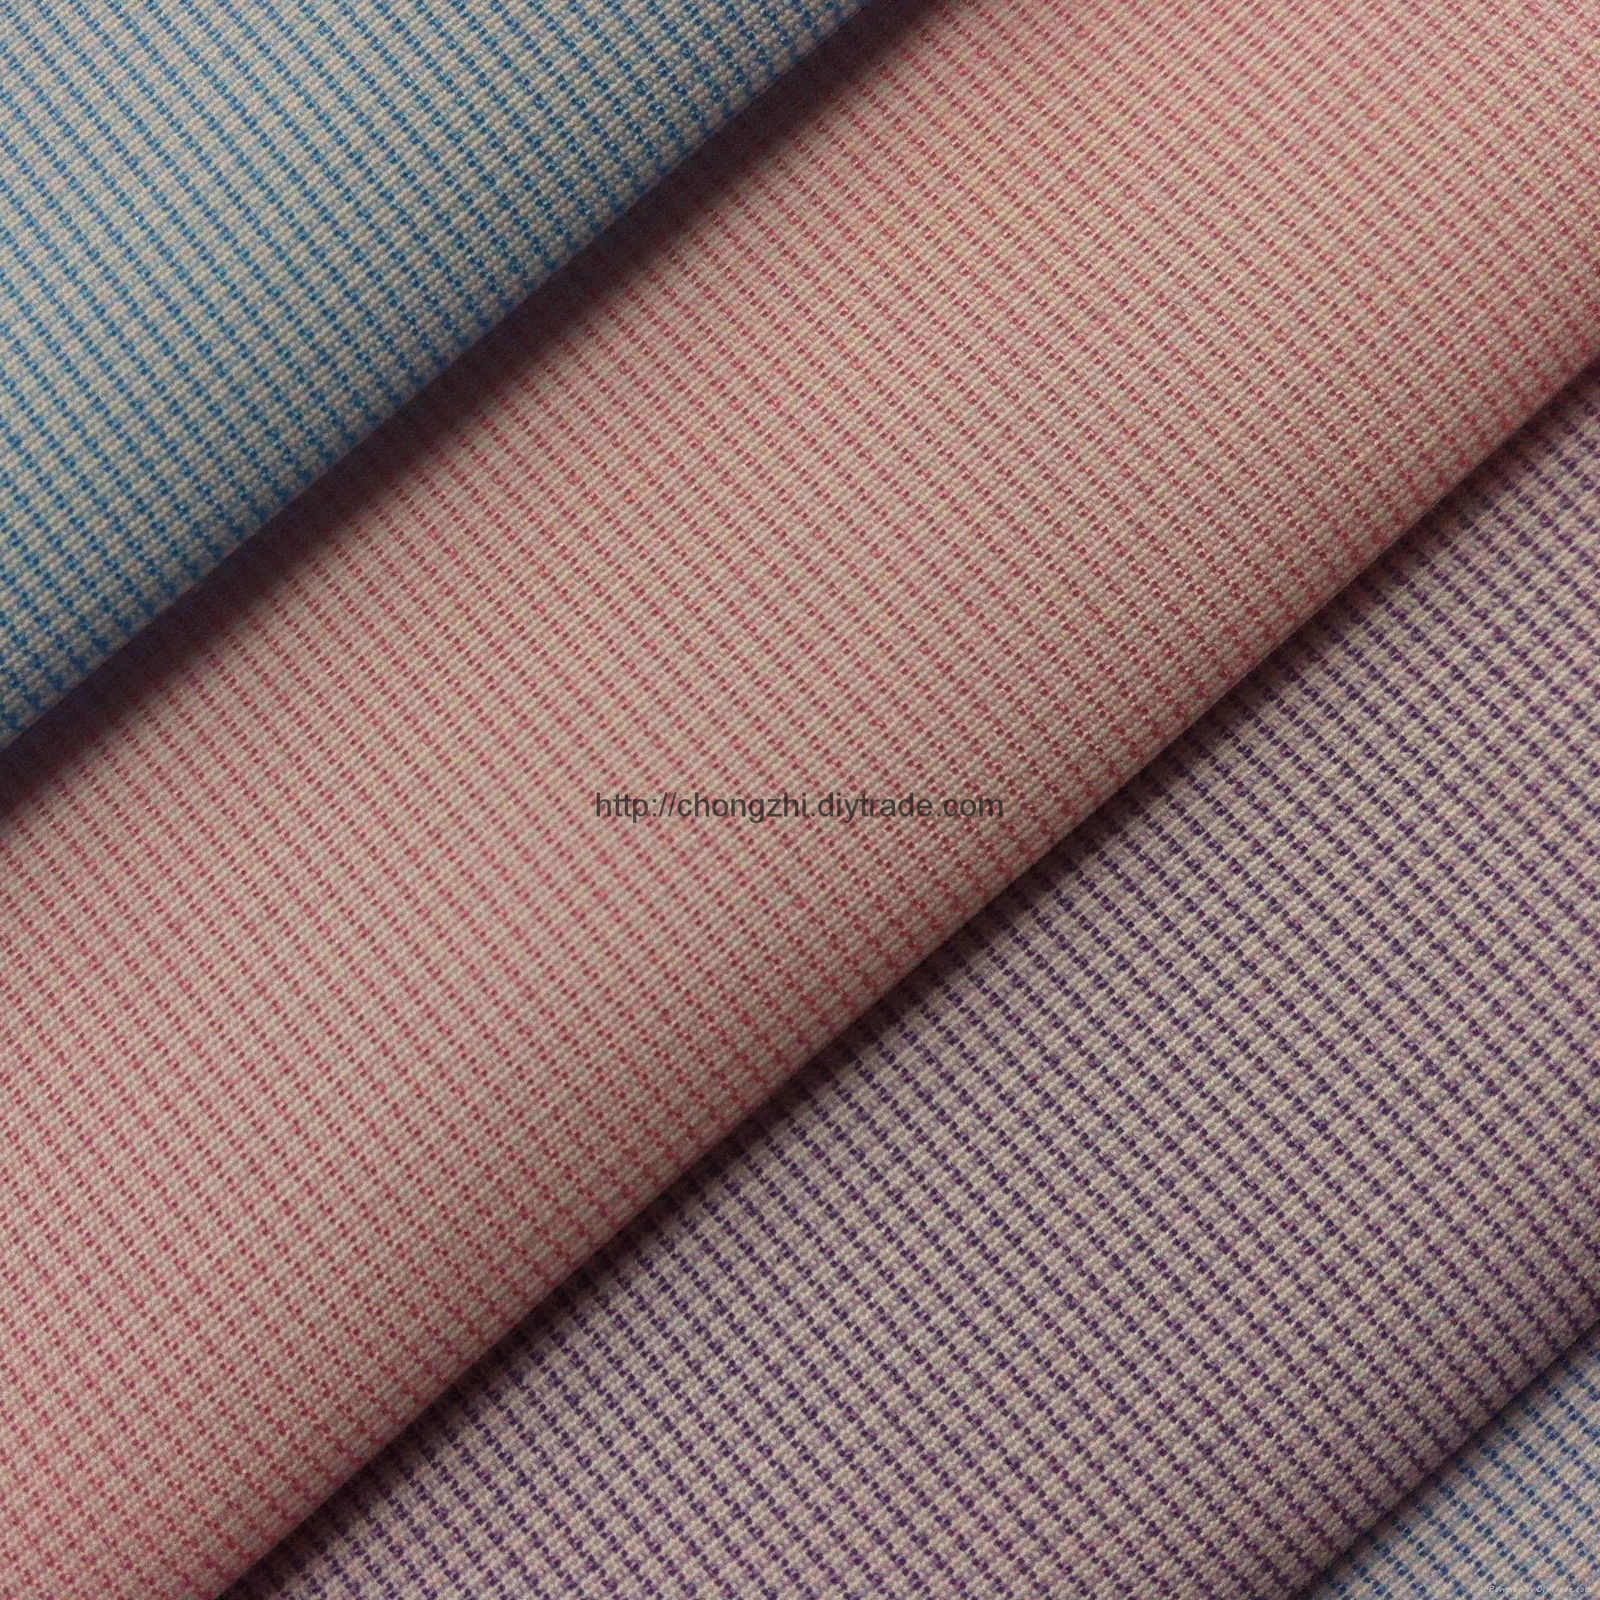 Striped shirt fabric 5